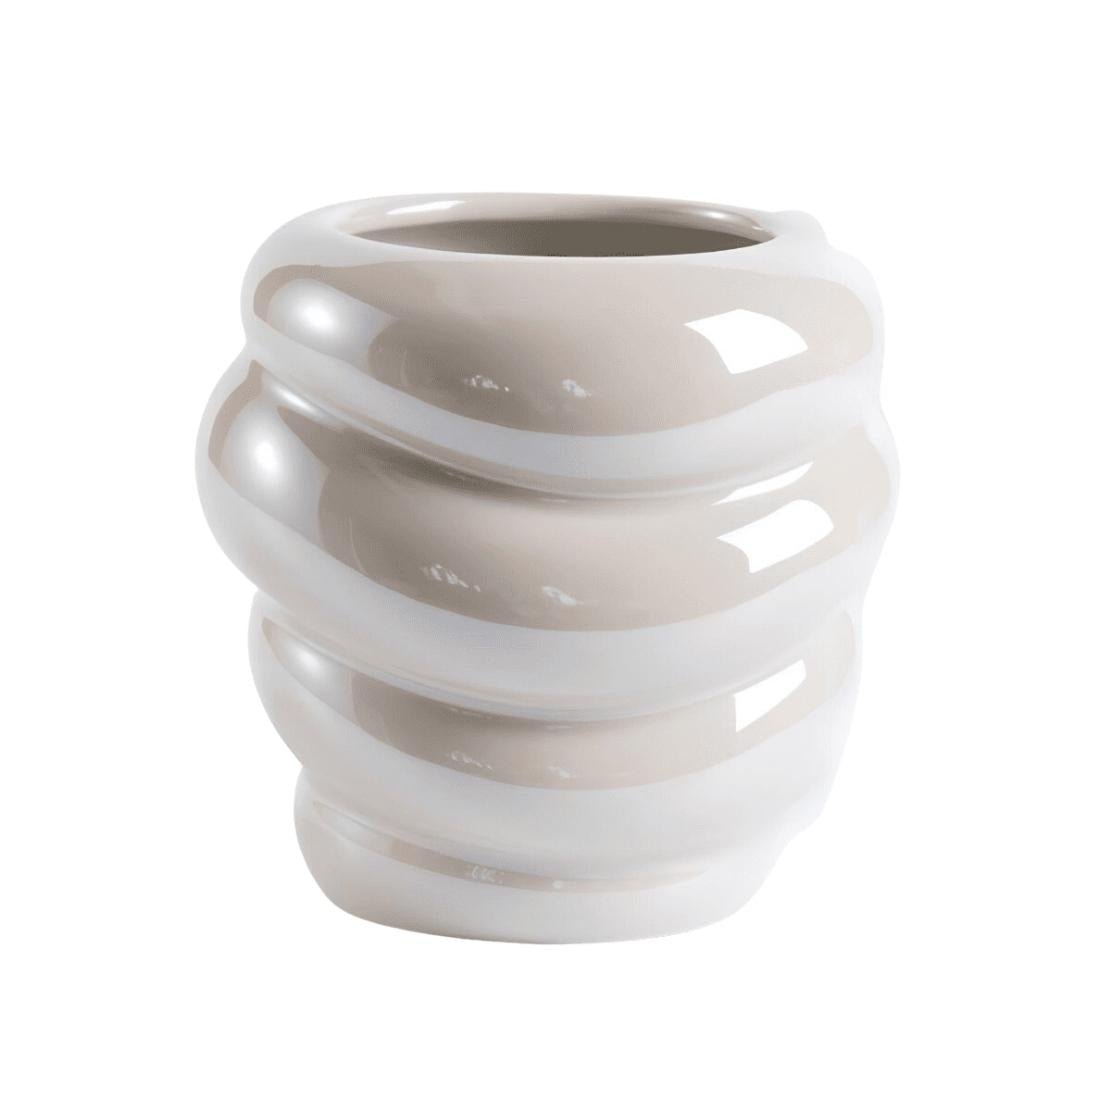 Low, grey ceramic honeycomb vase